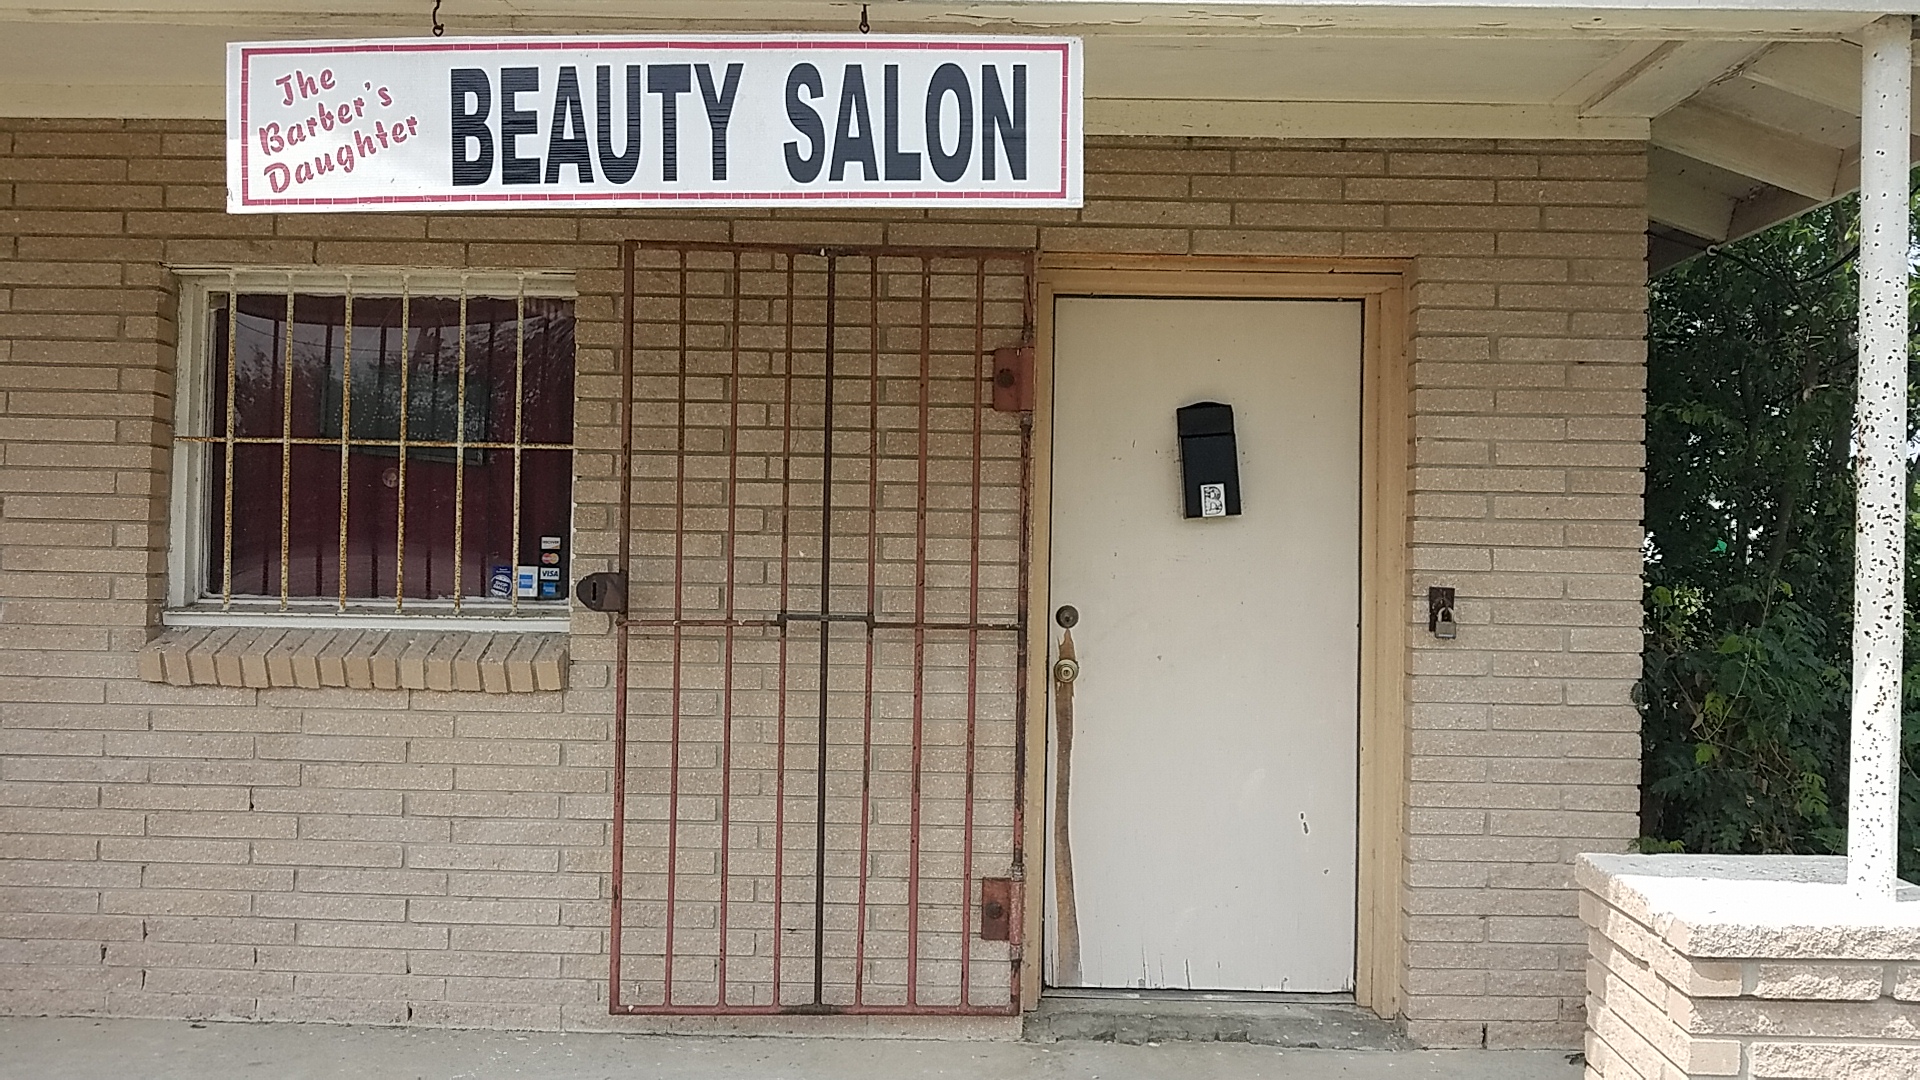 Barber's Daughter Beauty Salon